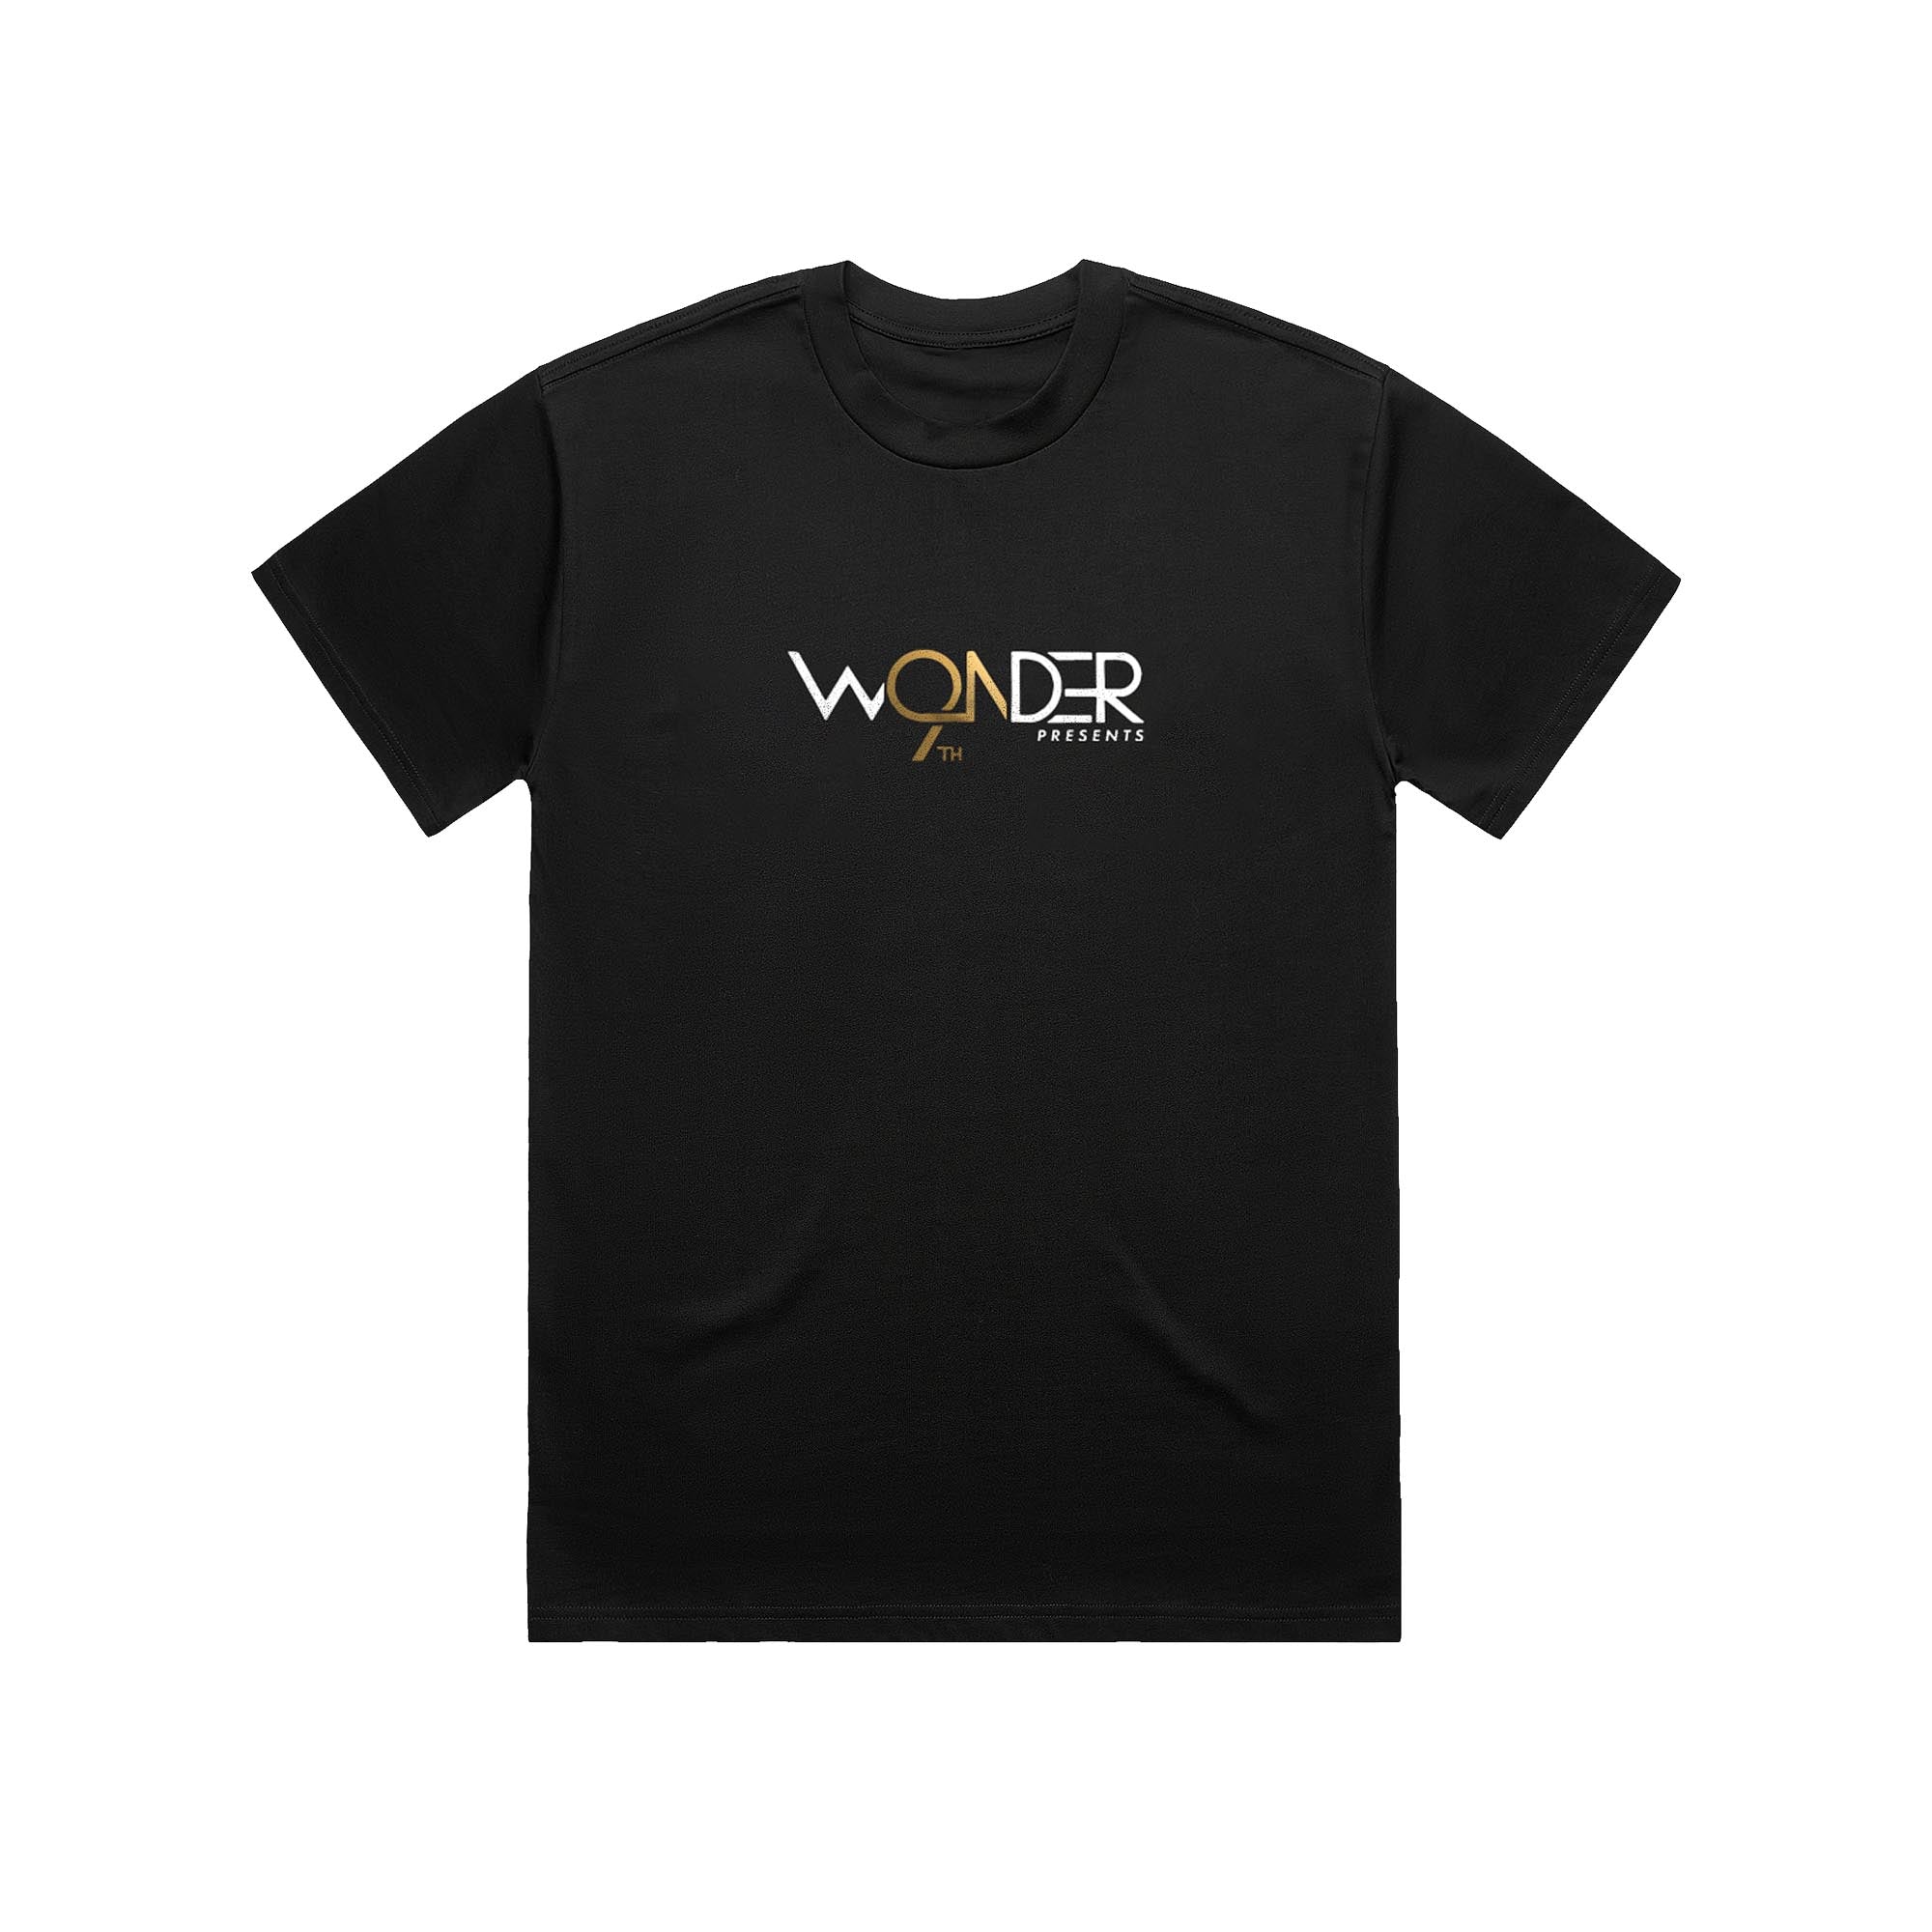 9th Wonder Presents... Tutankhamen (Black Shirt)